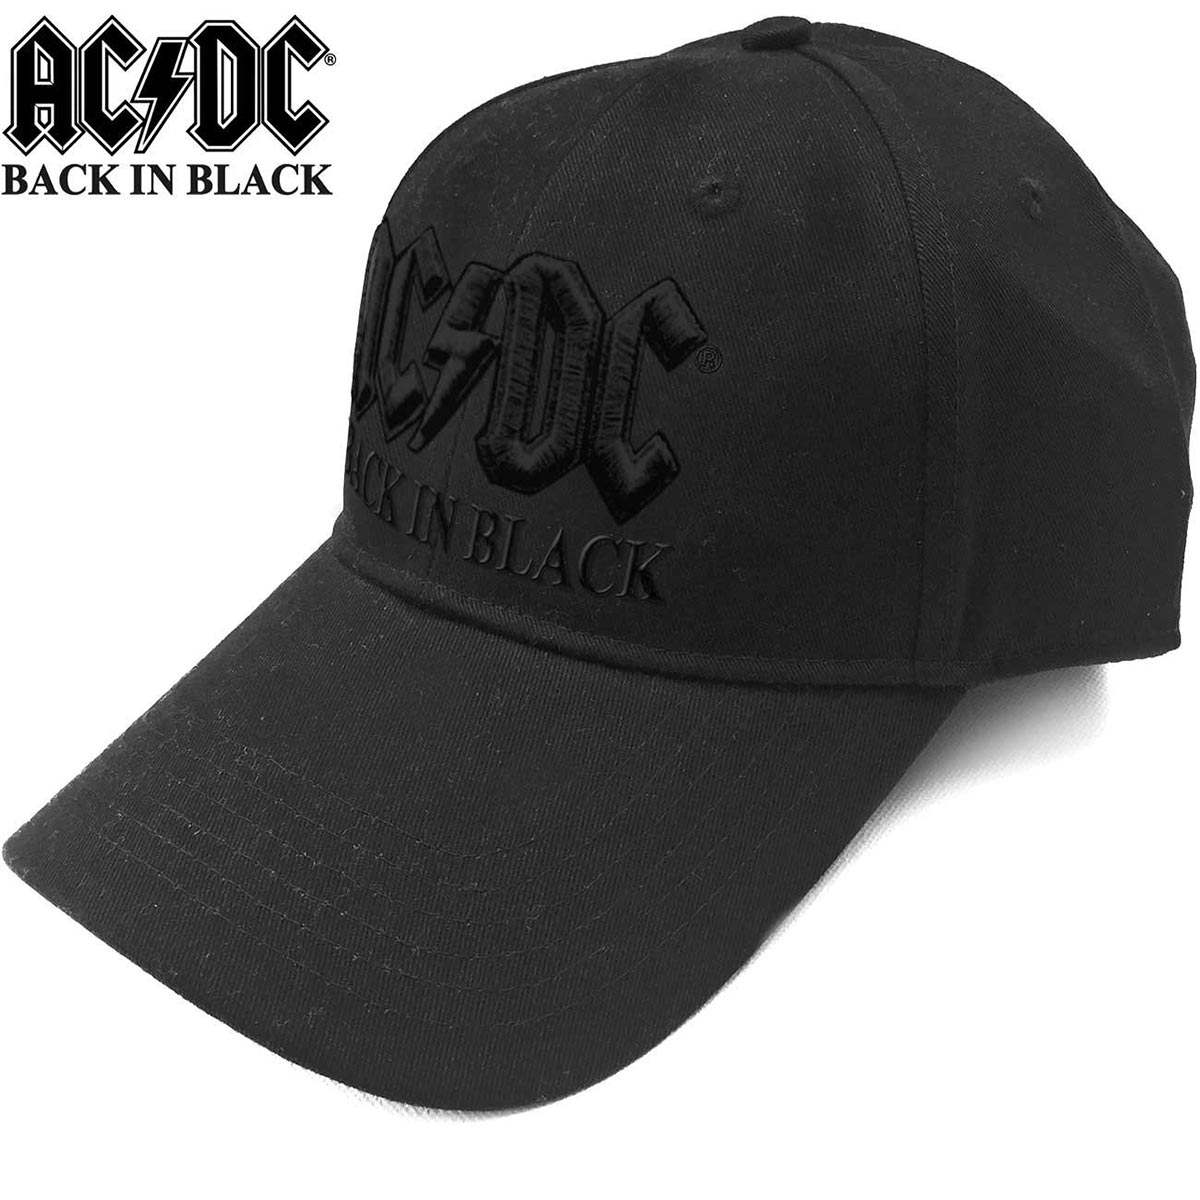 Back In Black svart caps fra AC/DC | RiffRaff.no